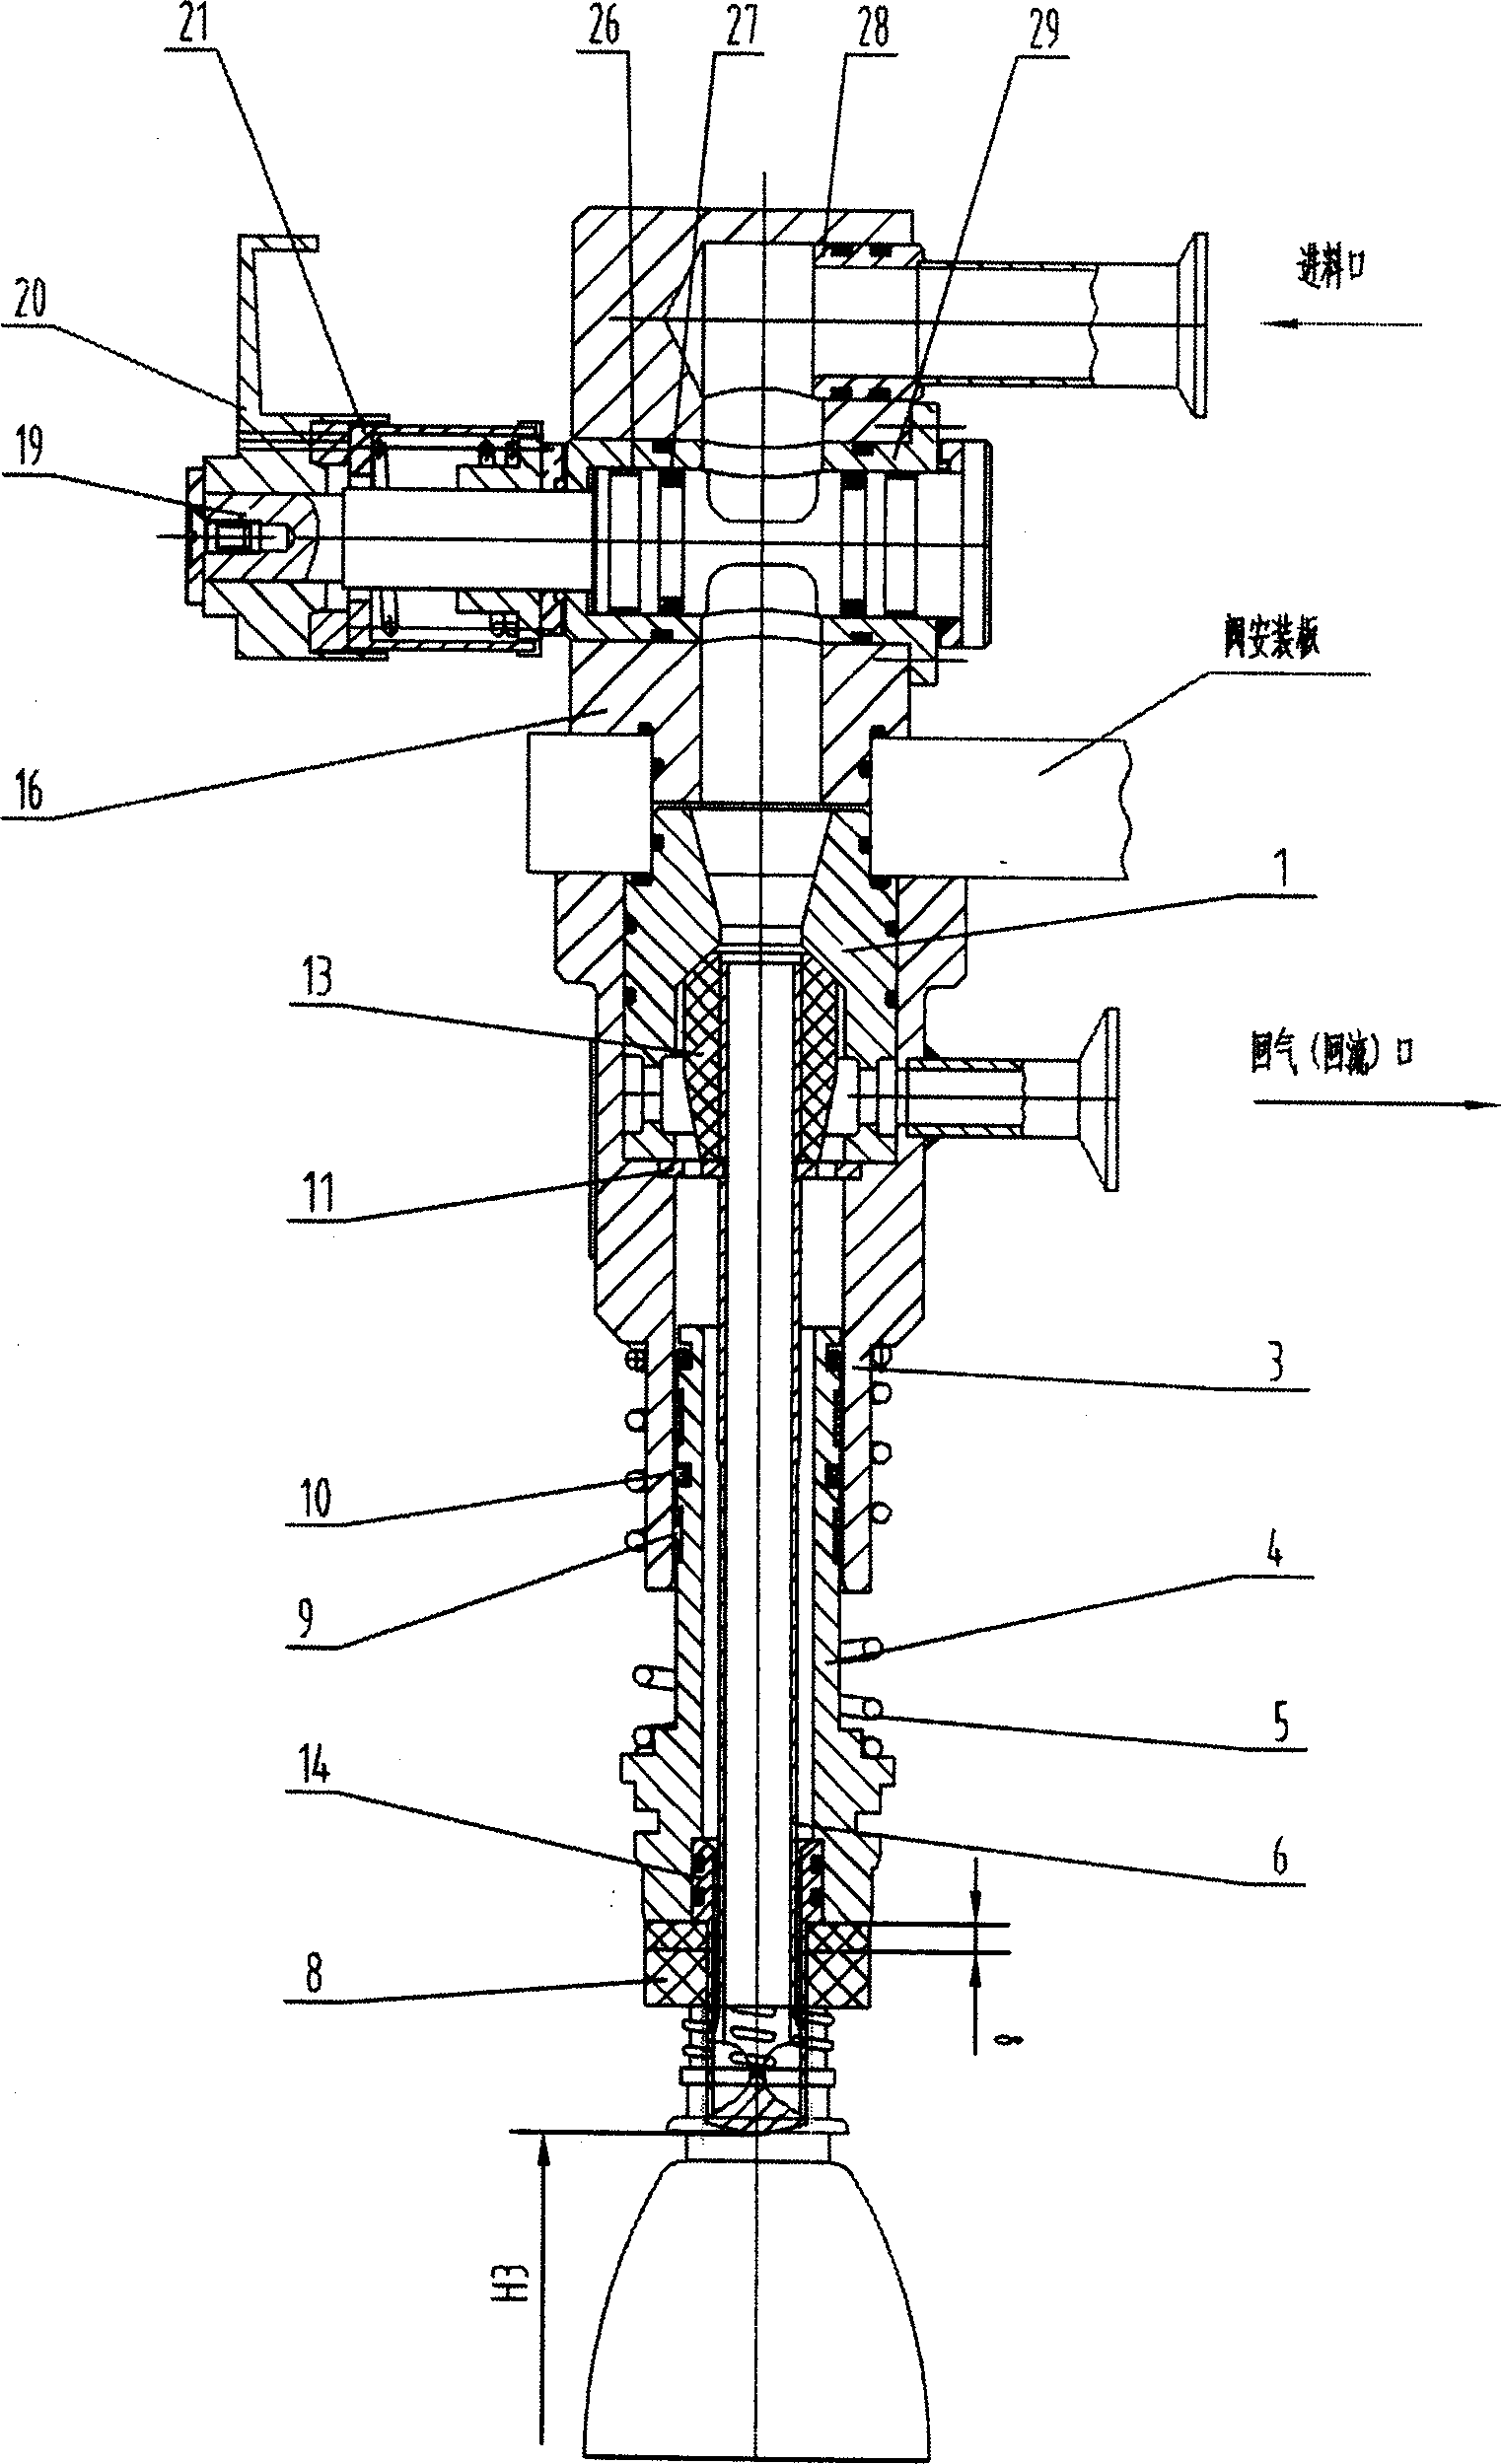 Thermal loading valve